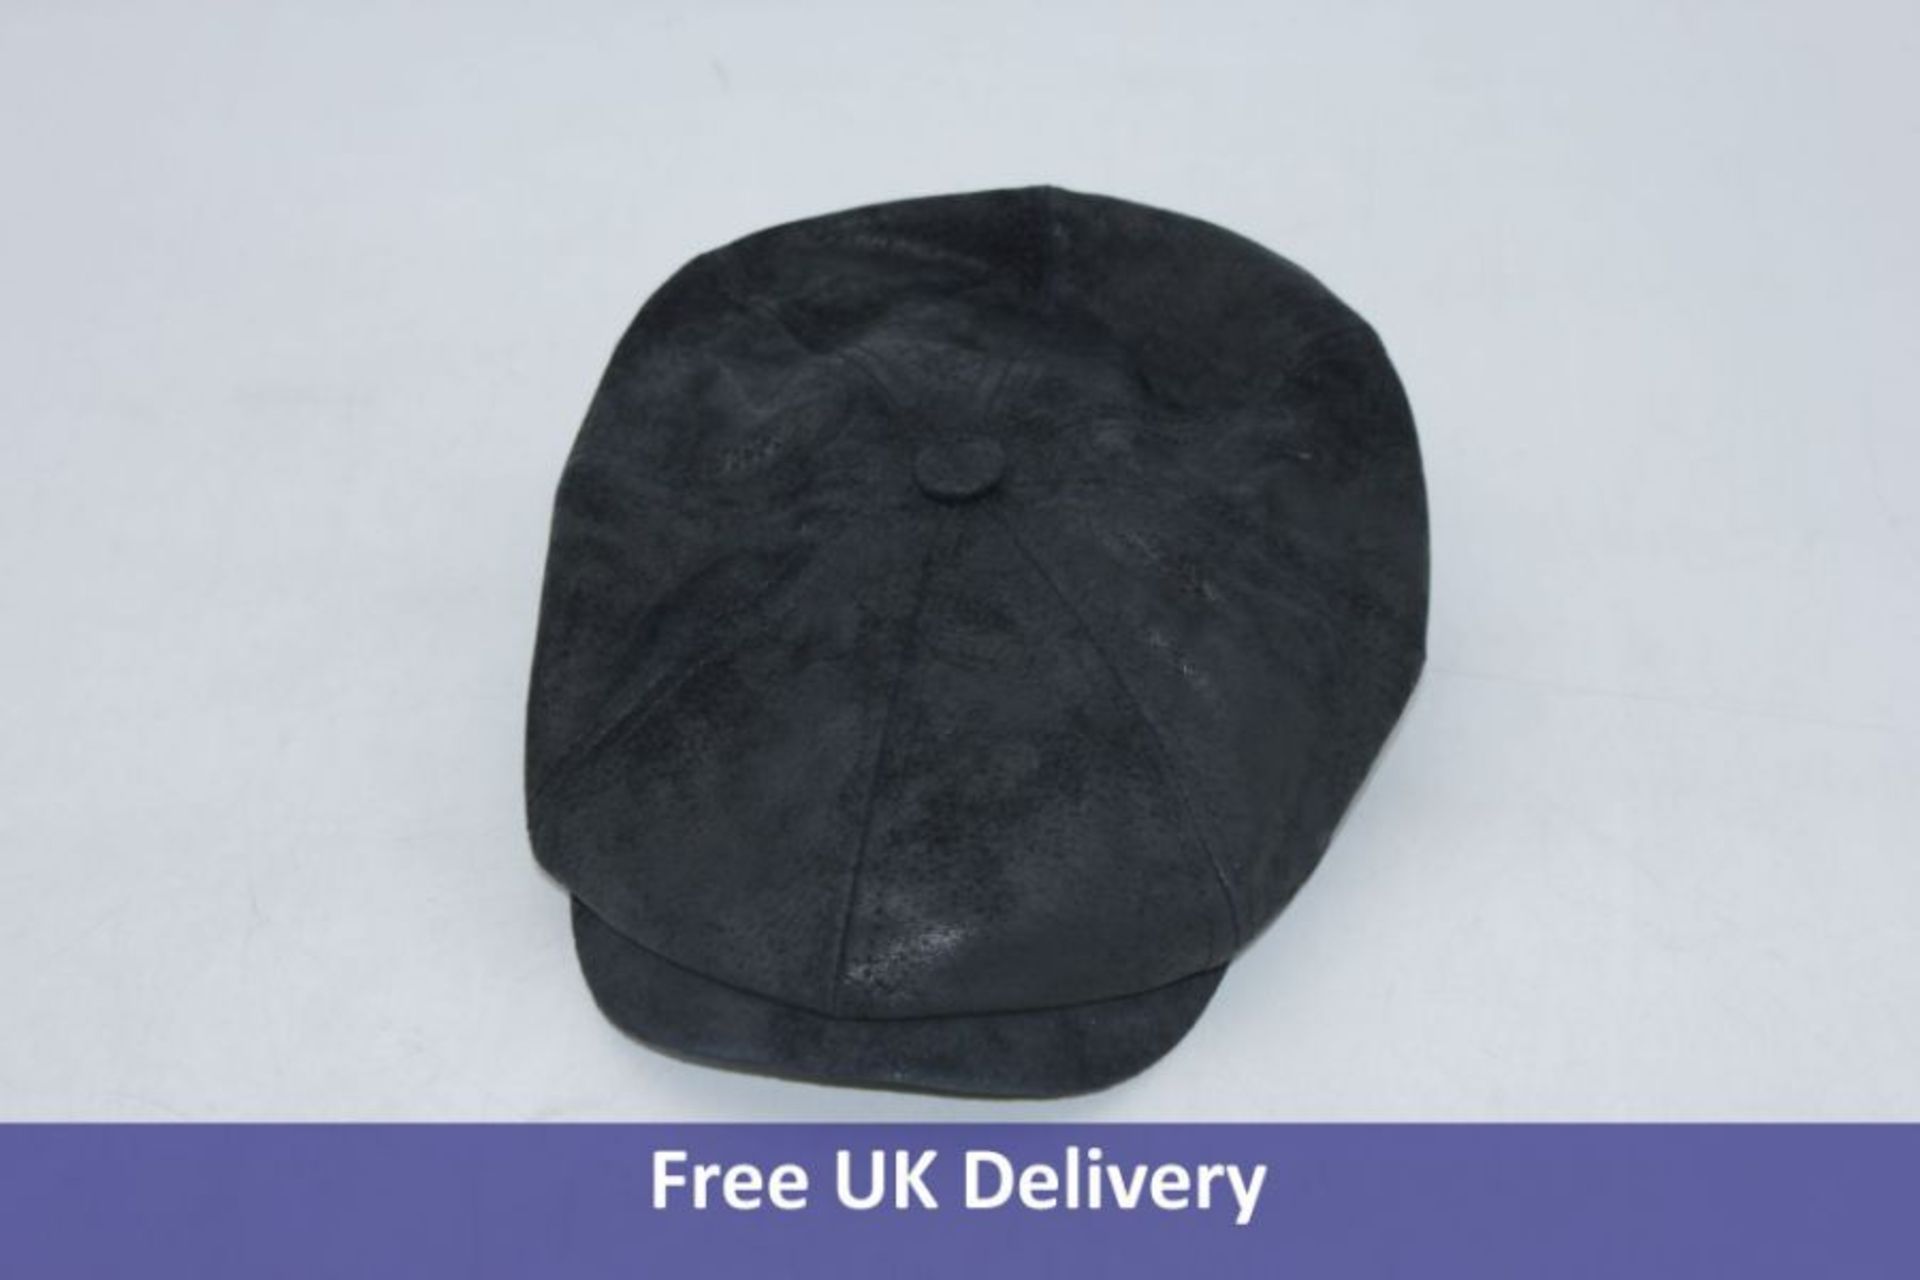 Two Stetson Leather Hatteras Newsboy Flat Cap, Black, UK M